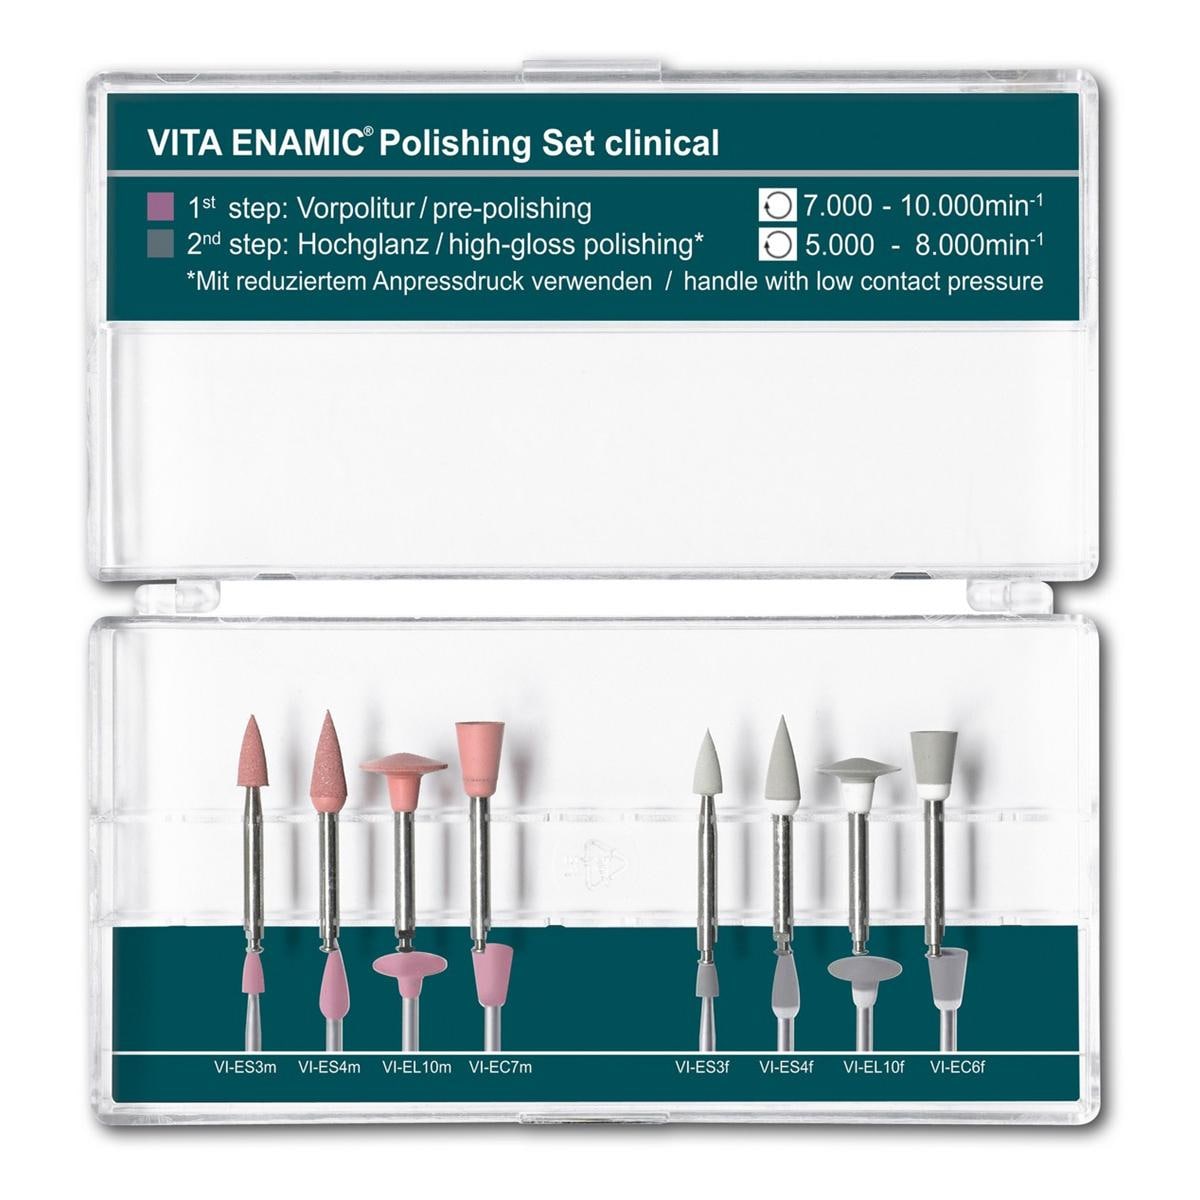 VITA Enamic Polishing Set Clinical - Assortiment, 8 stuks